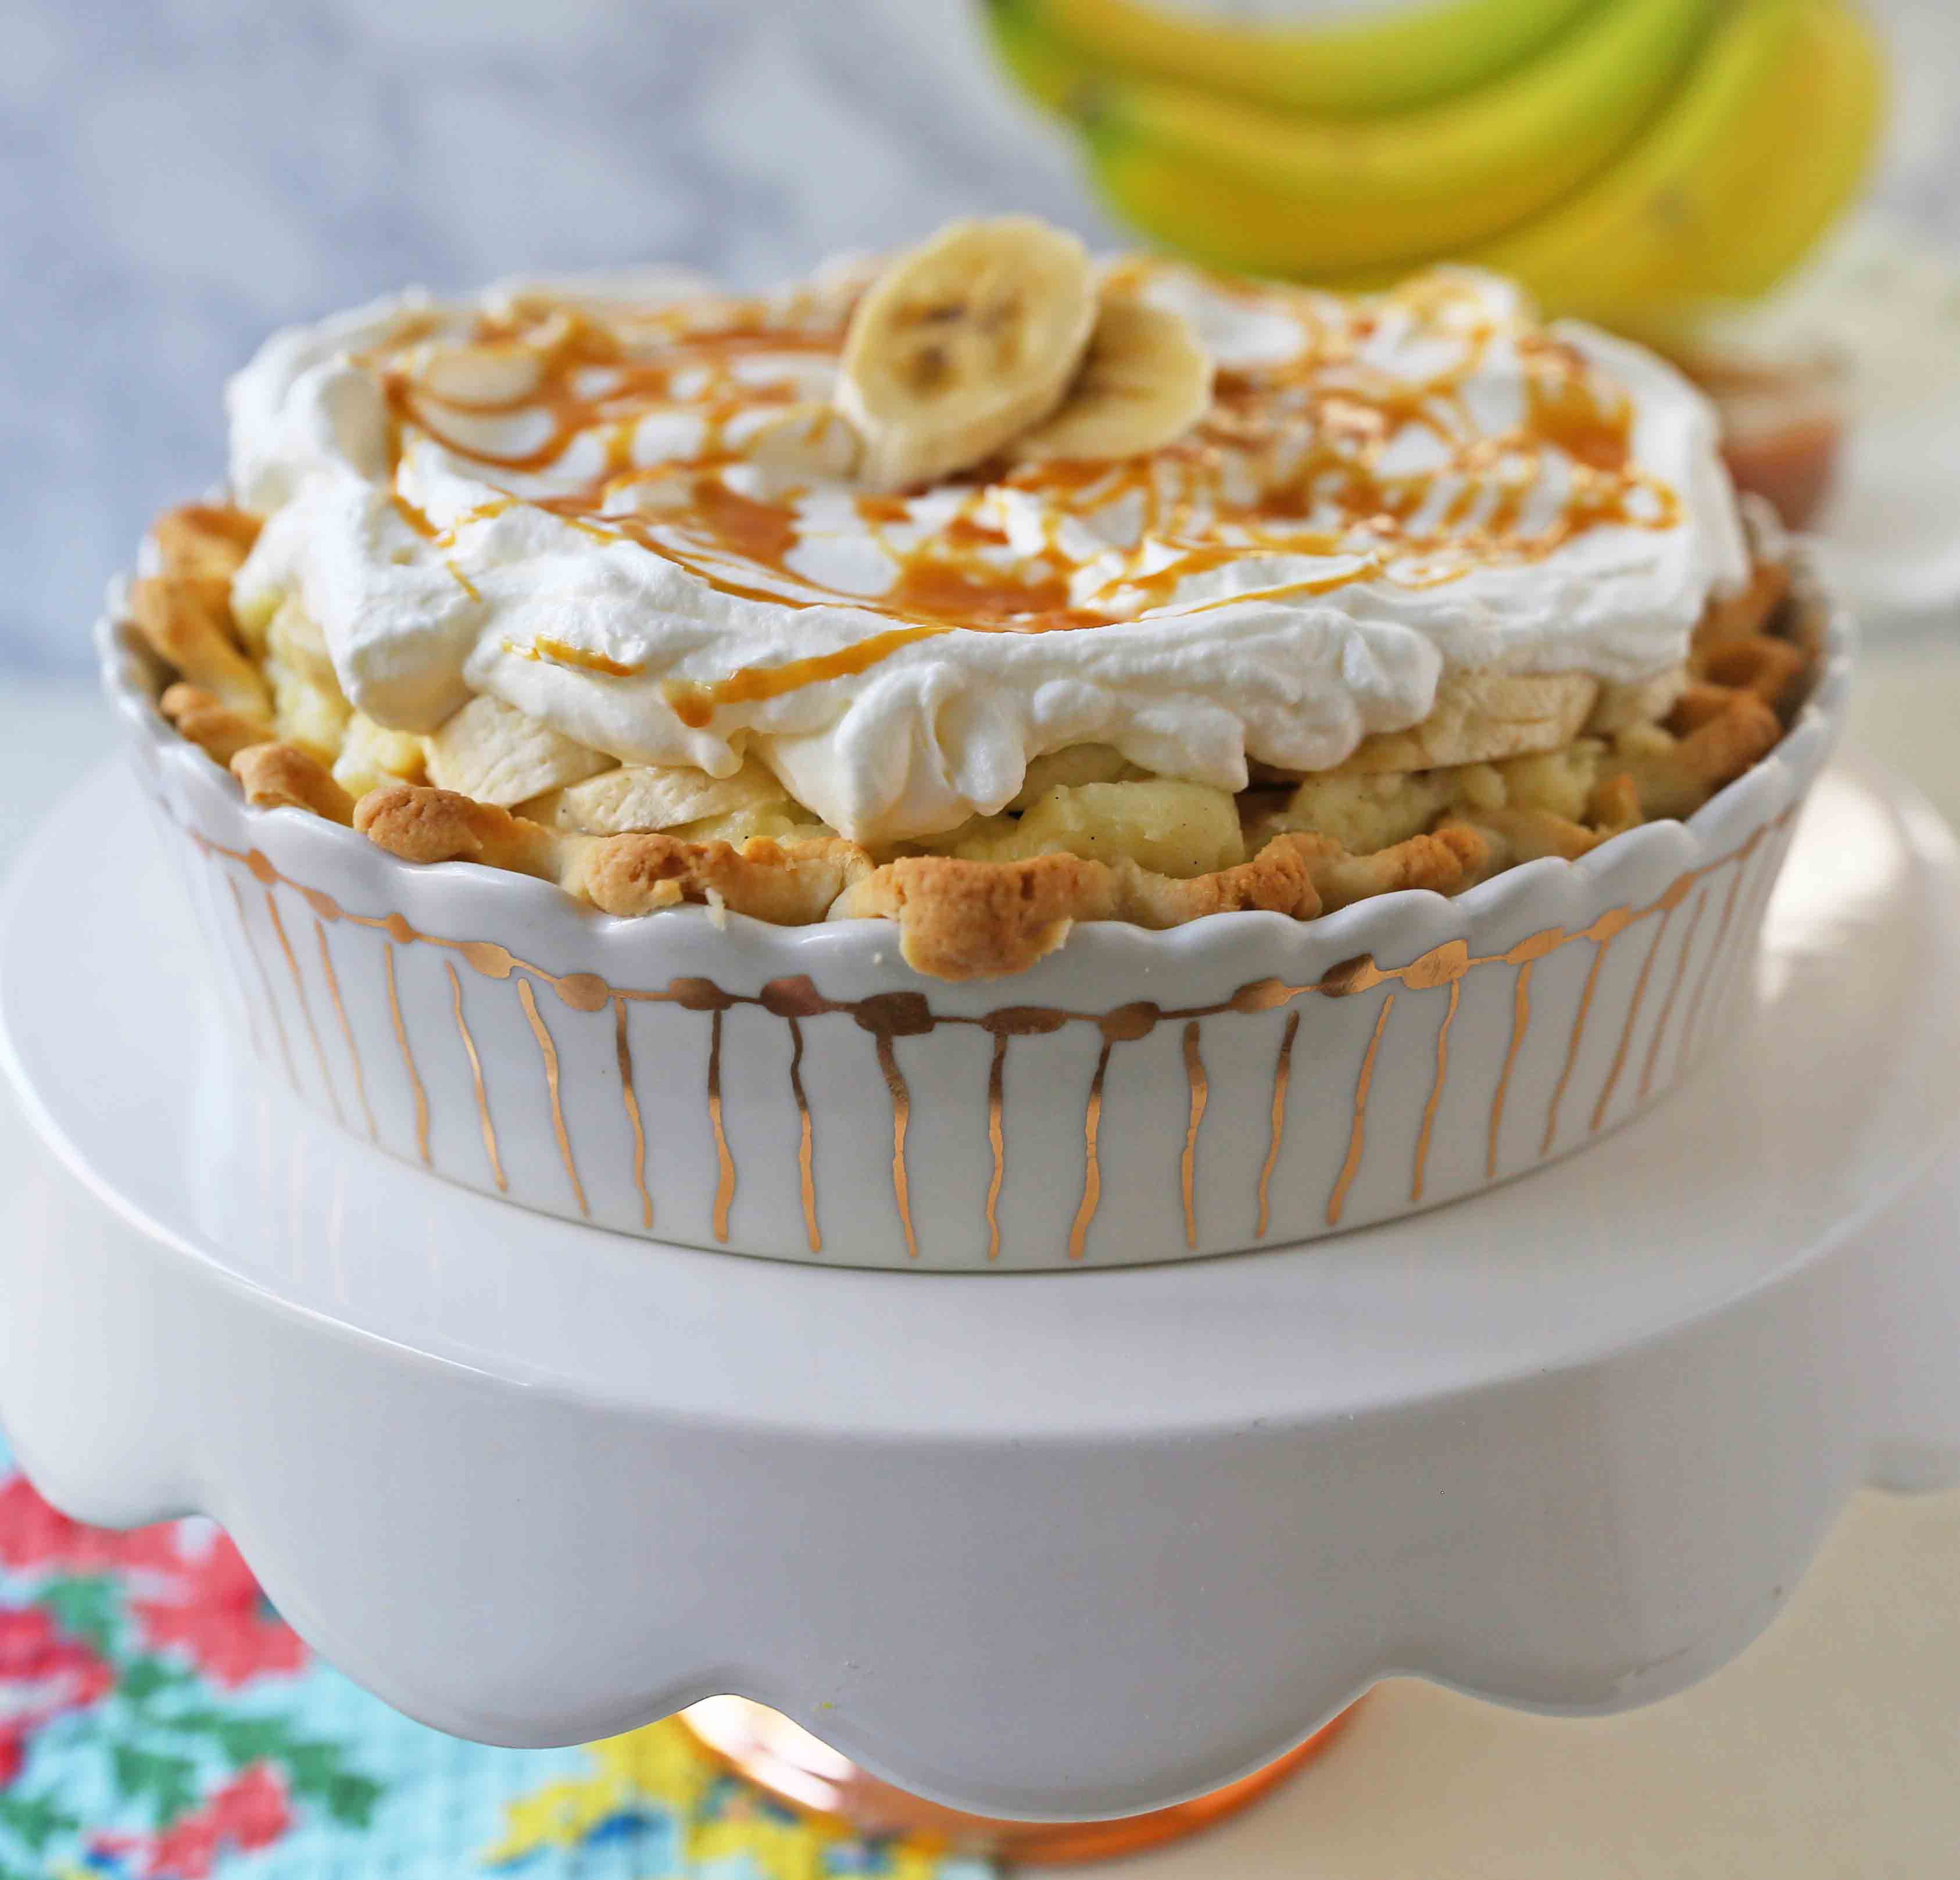 Salted Caramel Banana Cream Pie. Homemade banana cream pie with salted caramel. www.modernhoney.com #bananacreampie #caramelbananacreampie #thanksgivingpie #thanksgiving #pie #pierecipes